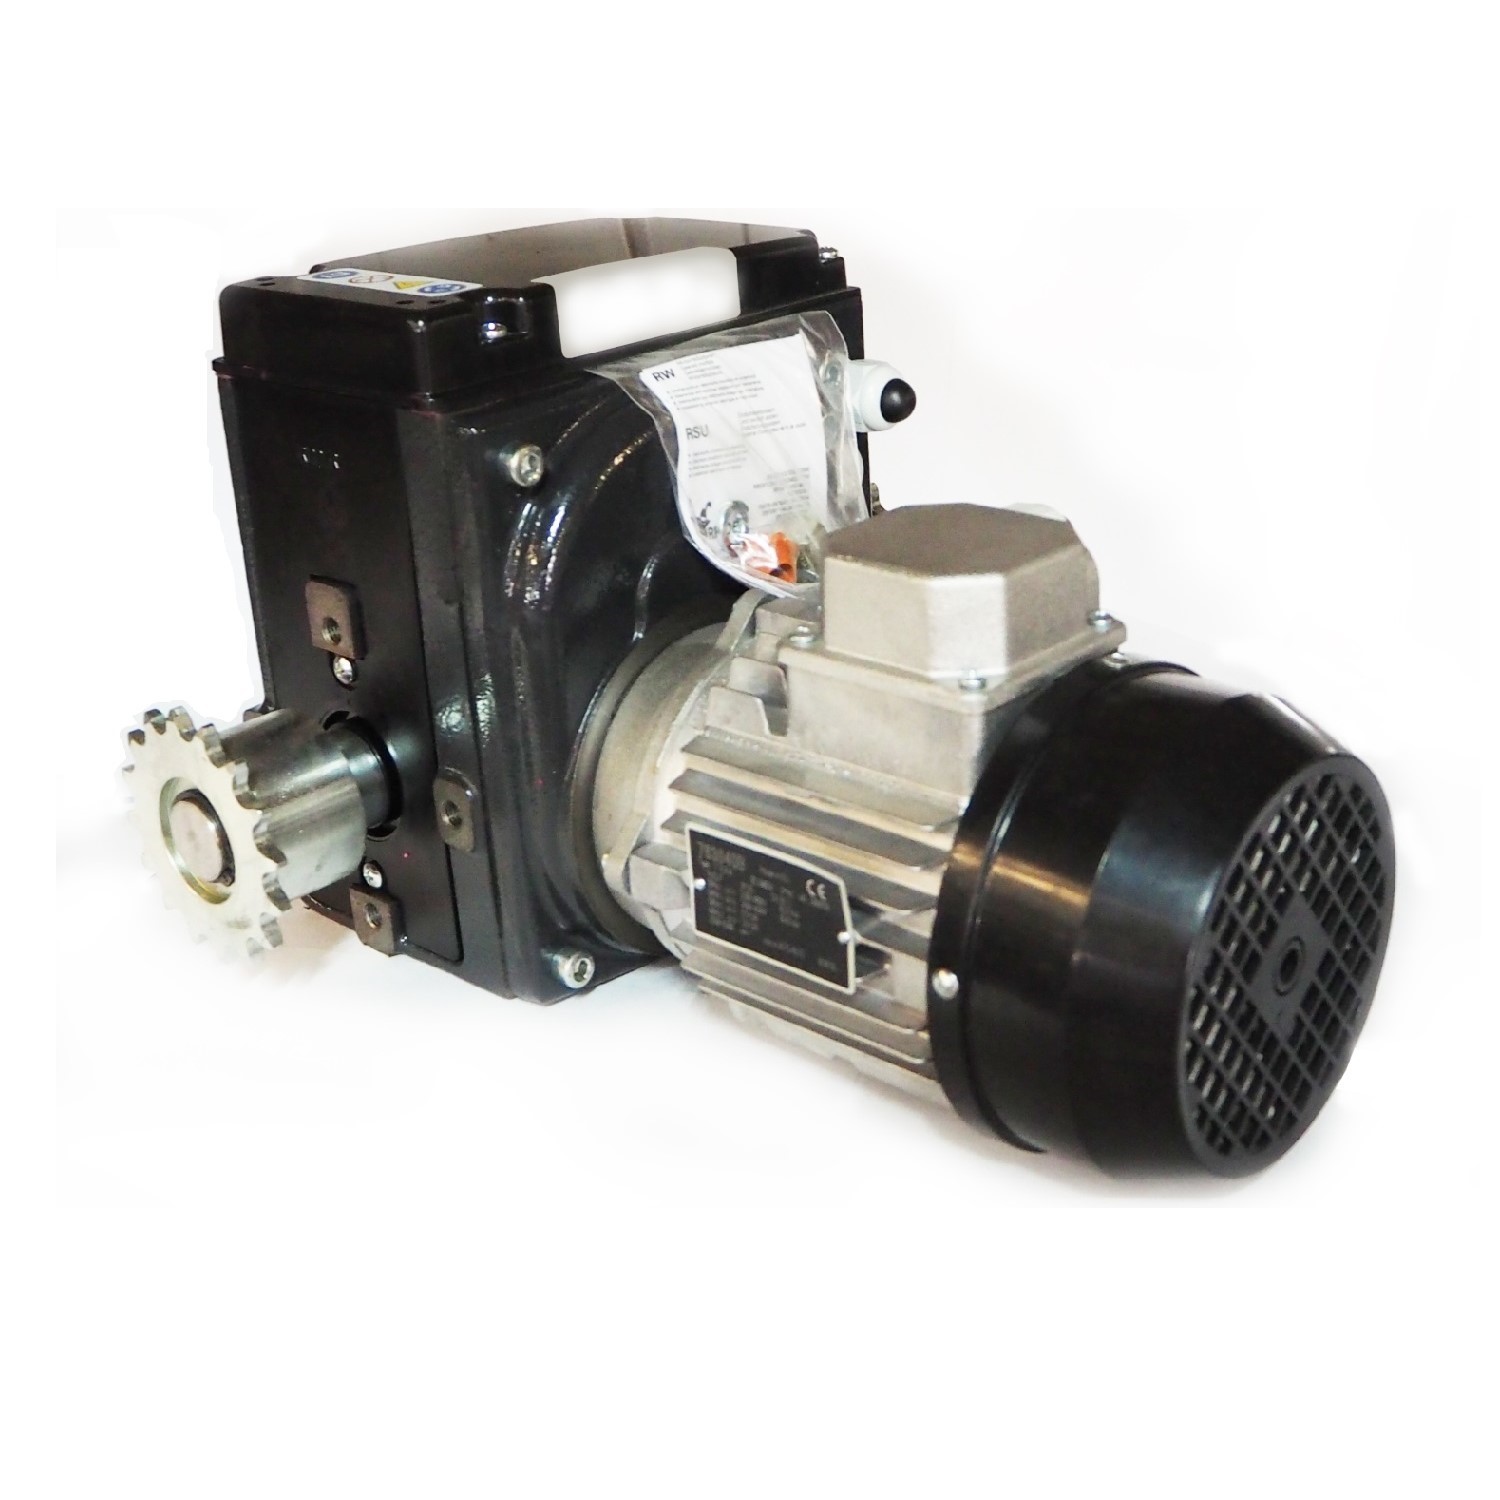 Motor gearbox Ridder RW403\400-450 Volt - 400-450 V - 3 Phase / 3 rpm - Ridder Art.-Nr.: 502210